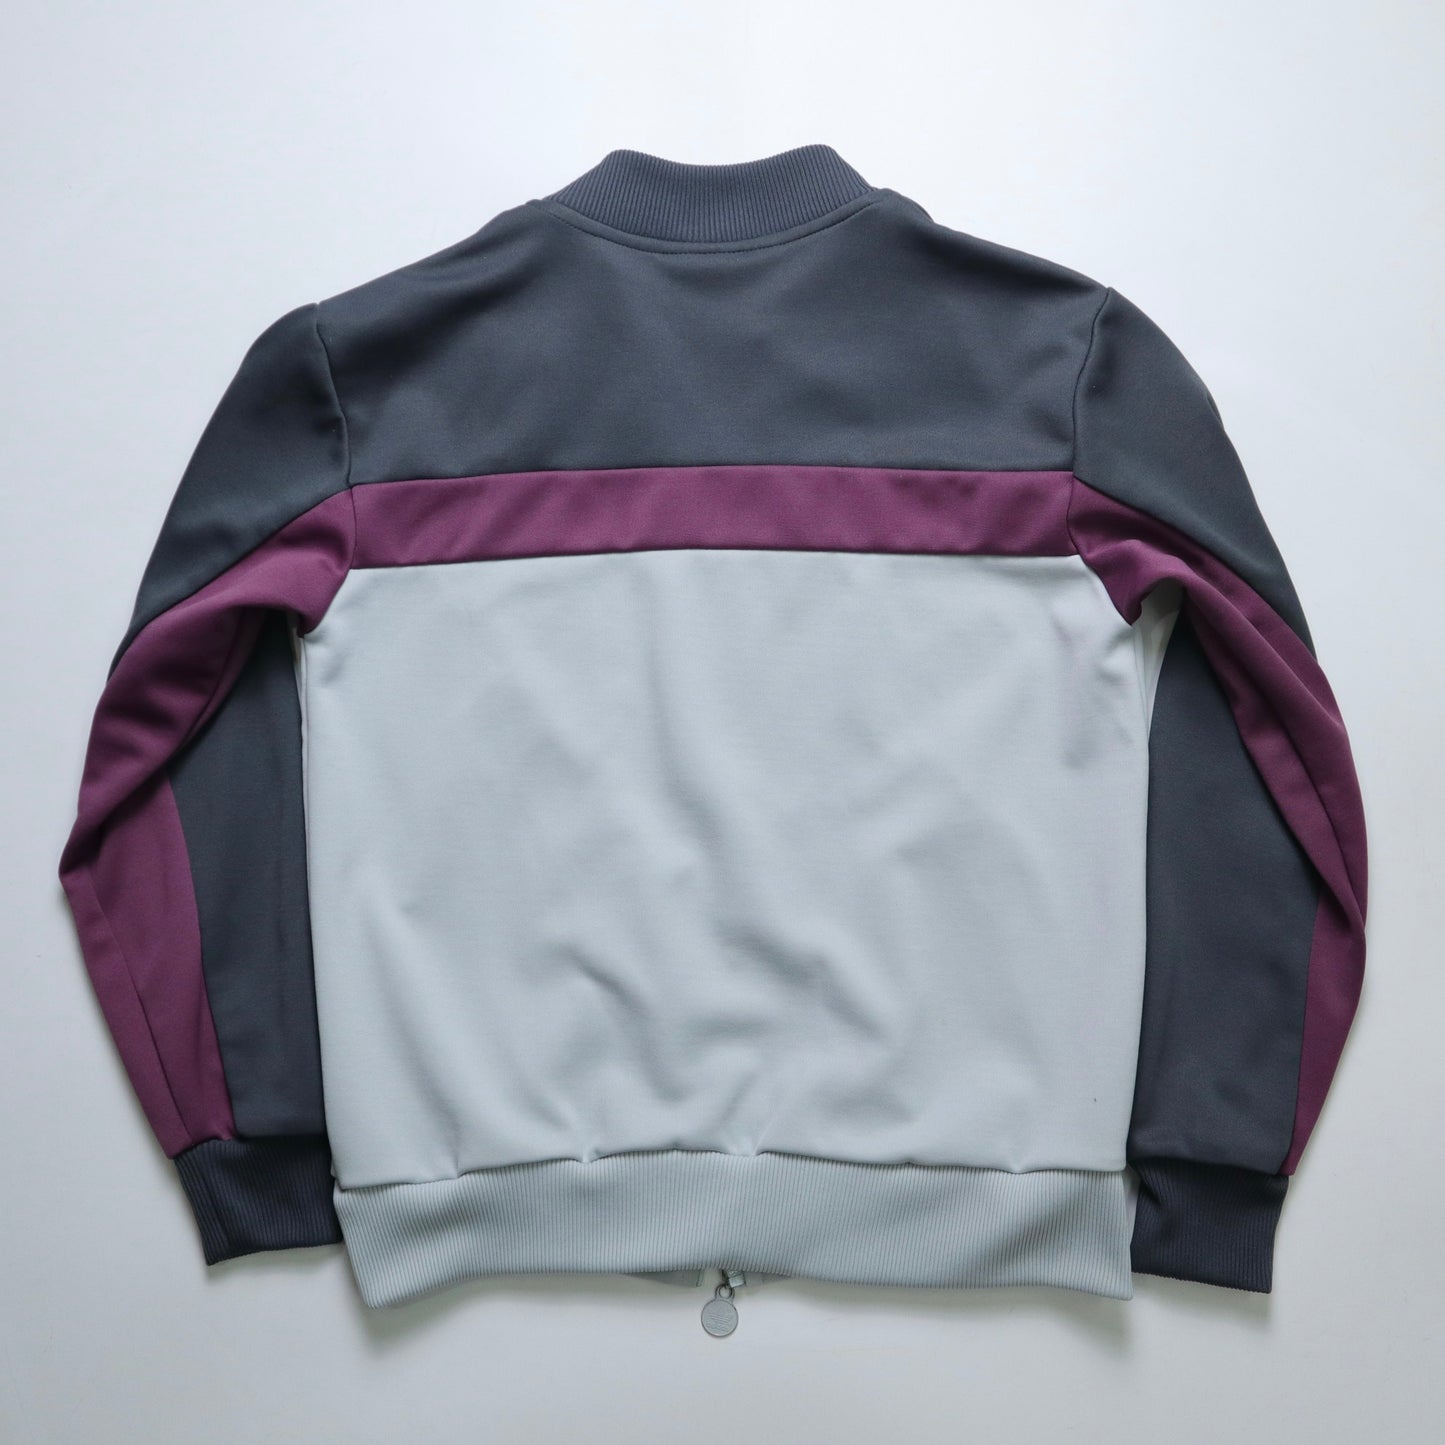 1980s Adidas 台灣製 灰紫拼色運動外套